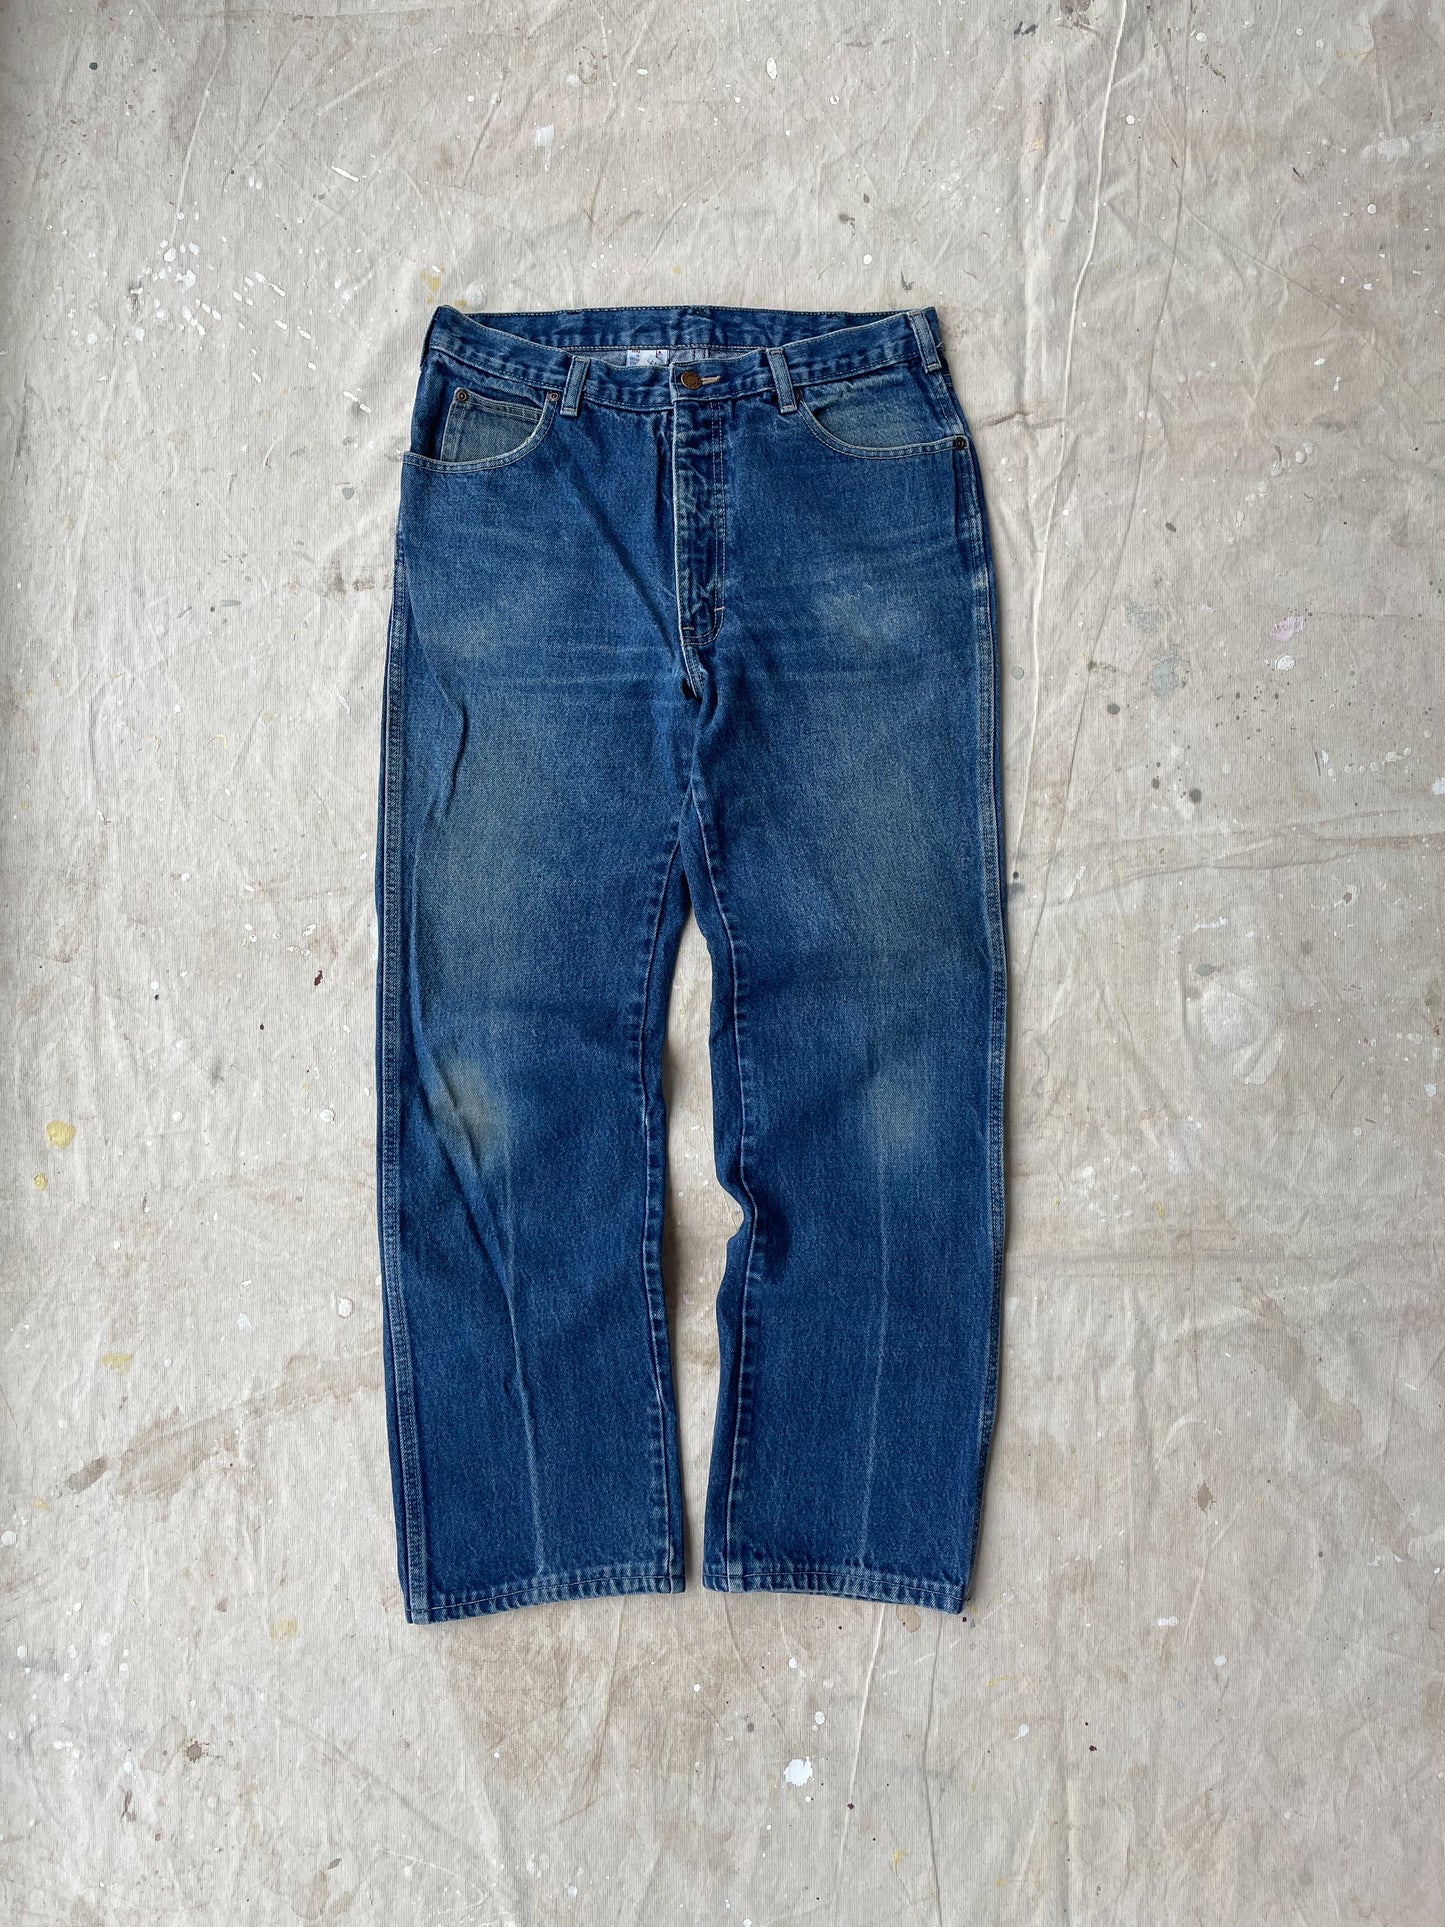 80's Calvin Klein Jeans—[32x30]